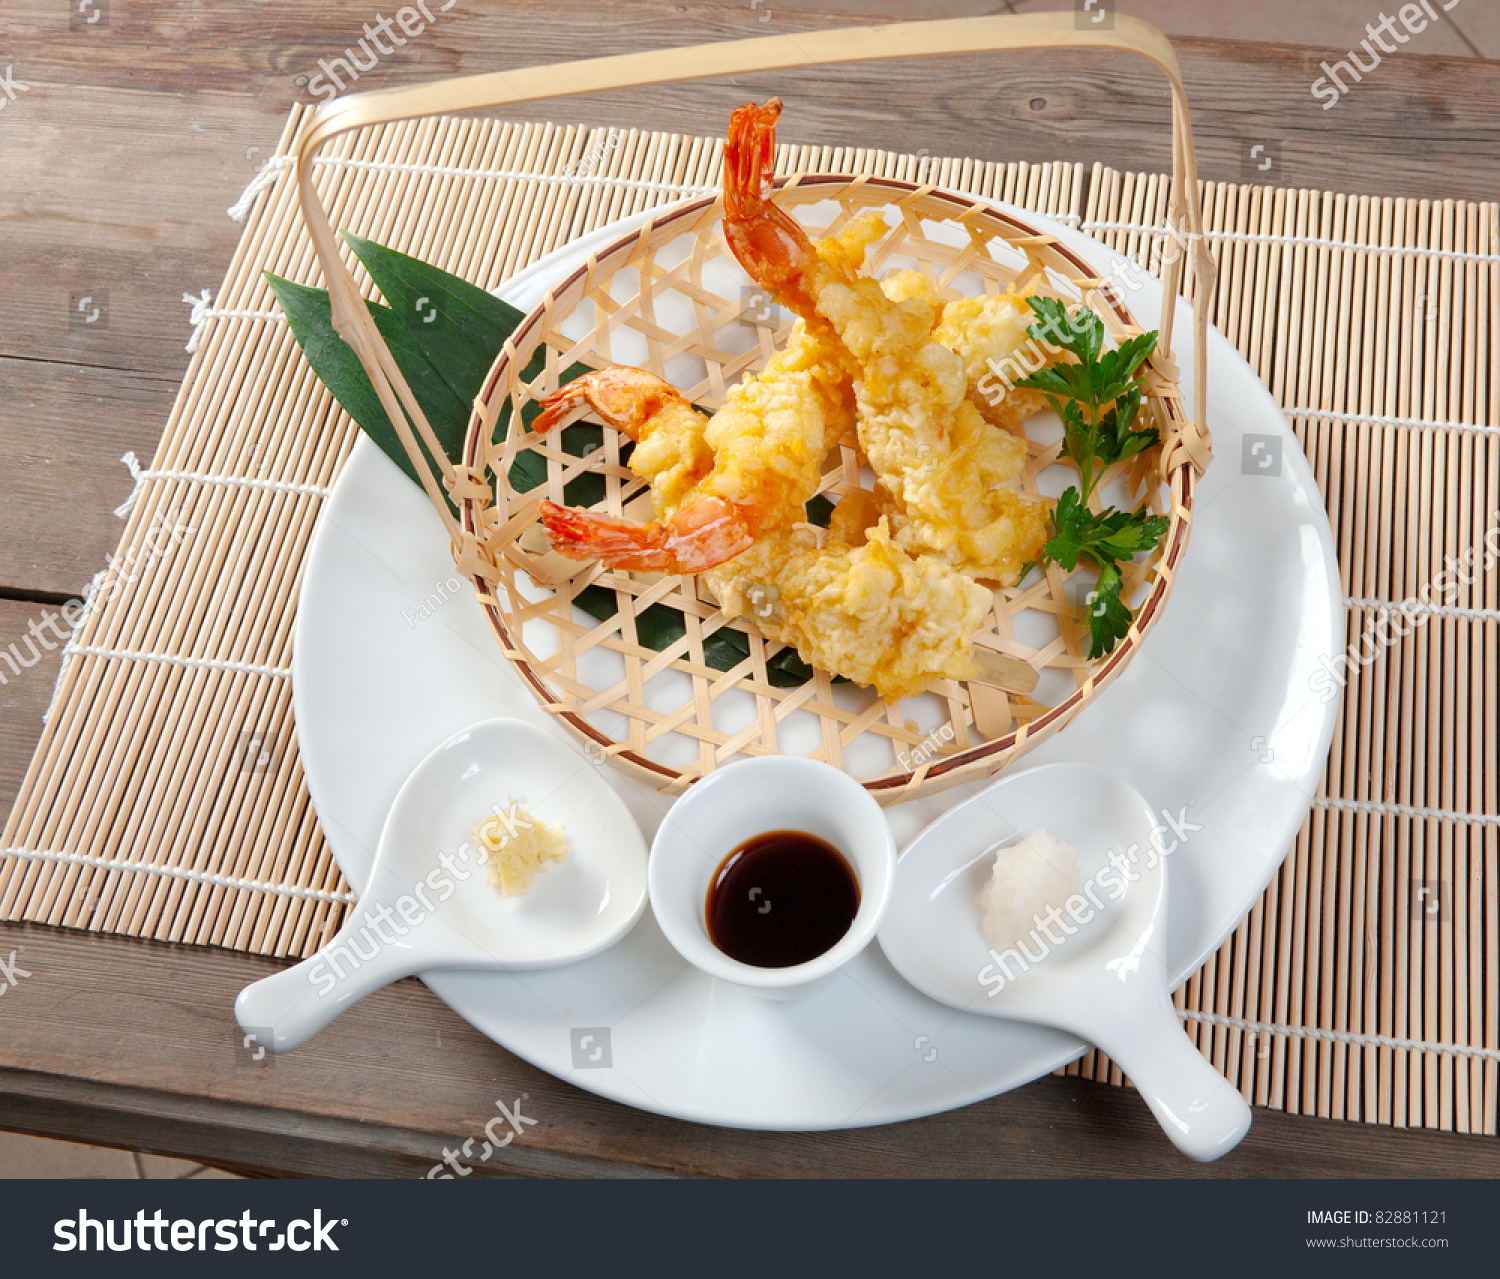 Japanese Fried Tempura With Shrimp In Braided Basket Stock Photo ...